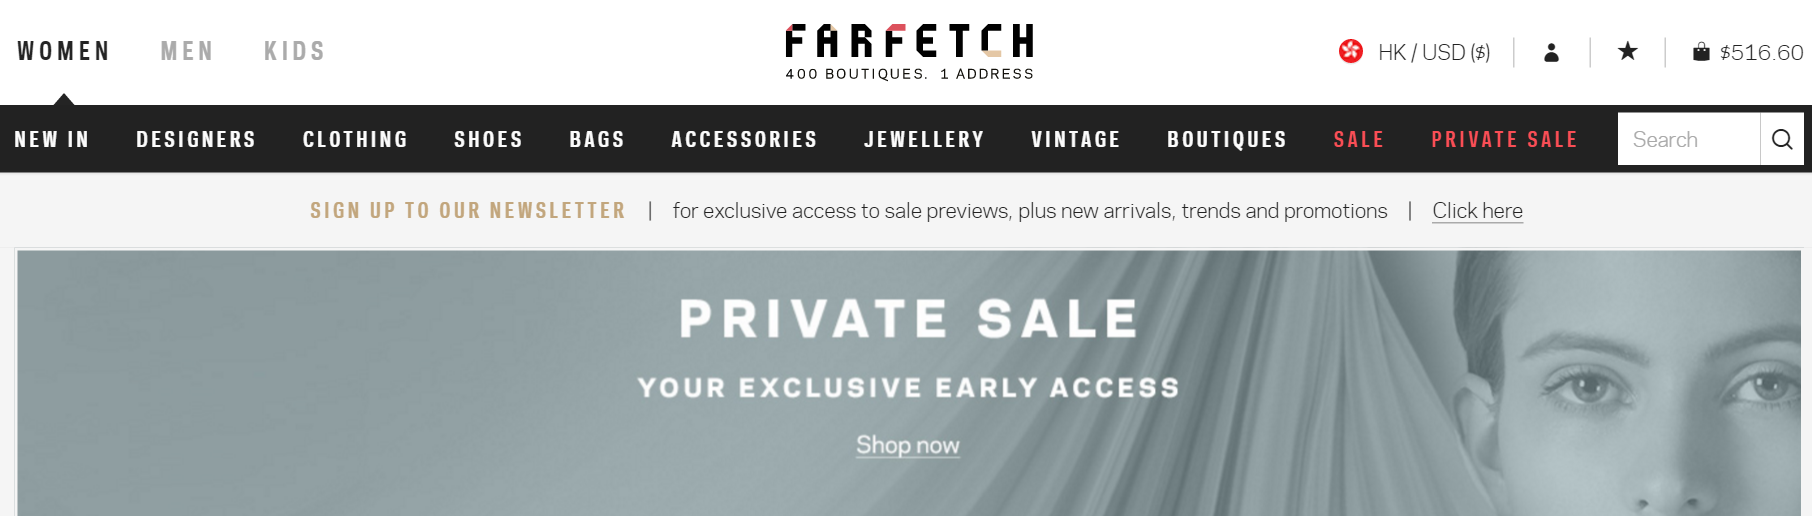 farfetch.com-a-new-way-to-shop-for-fashion